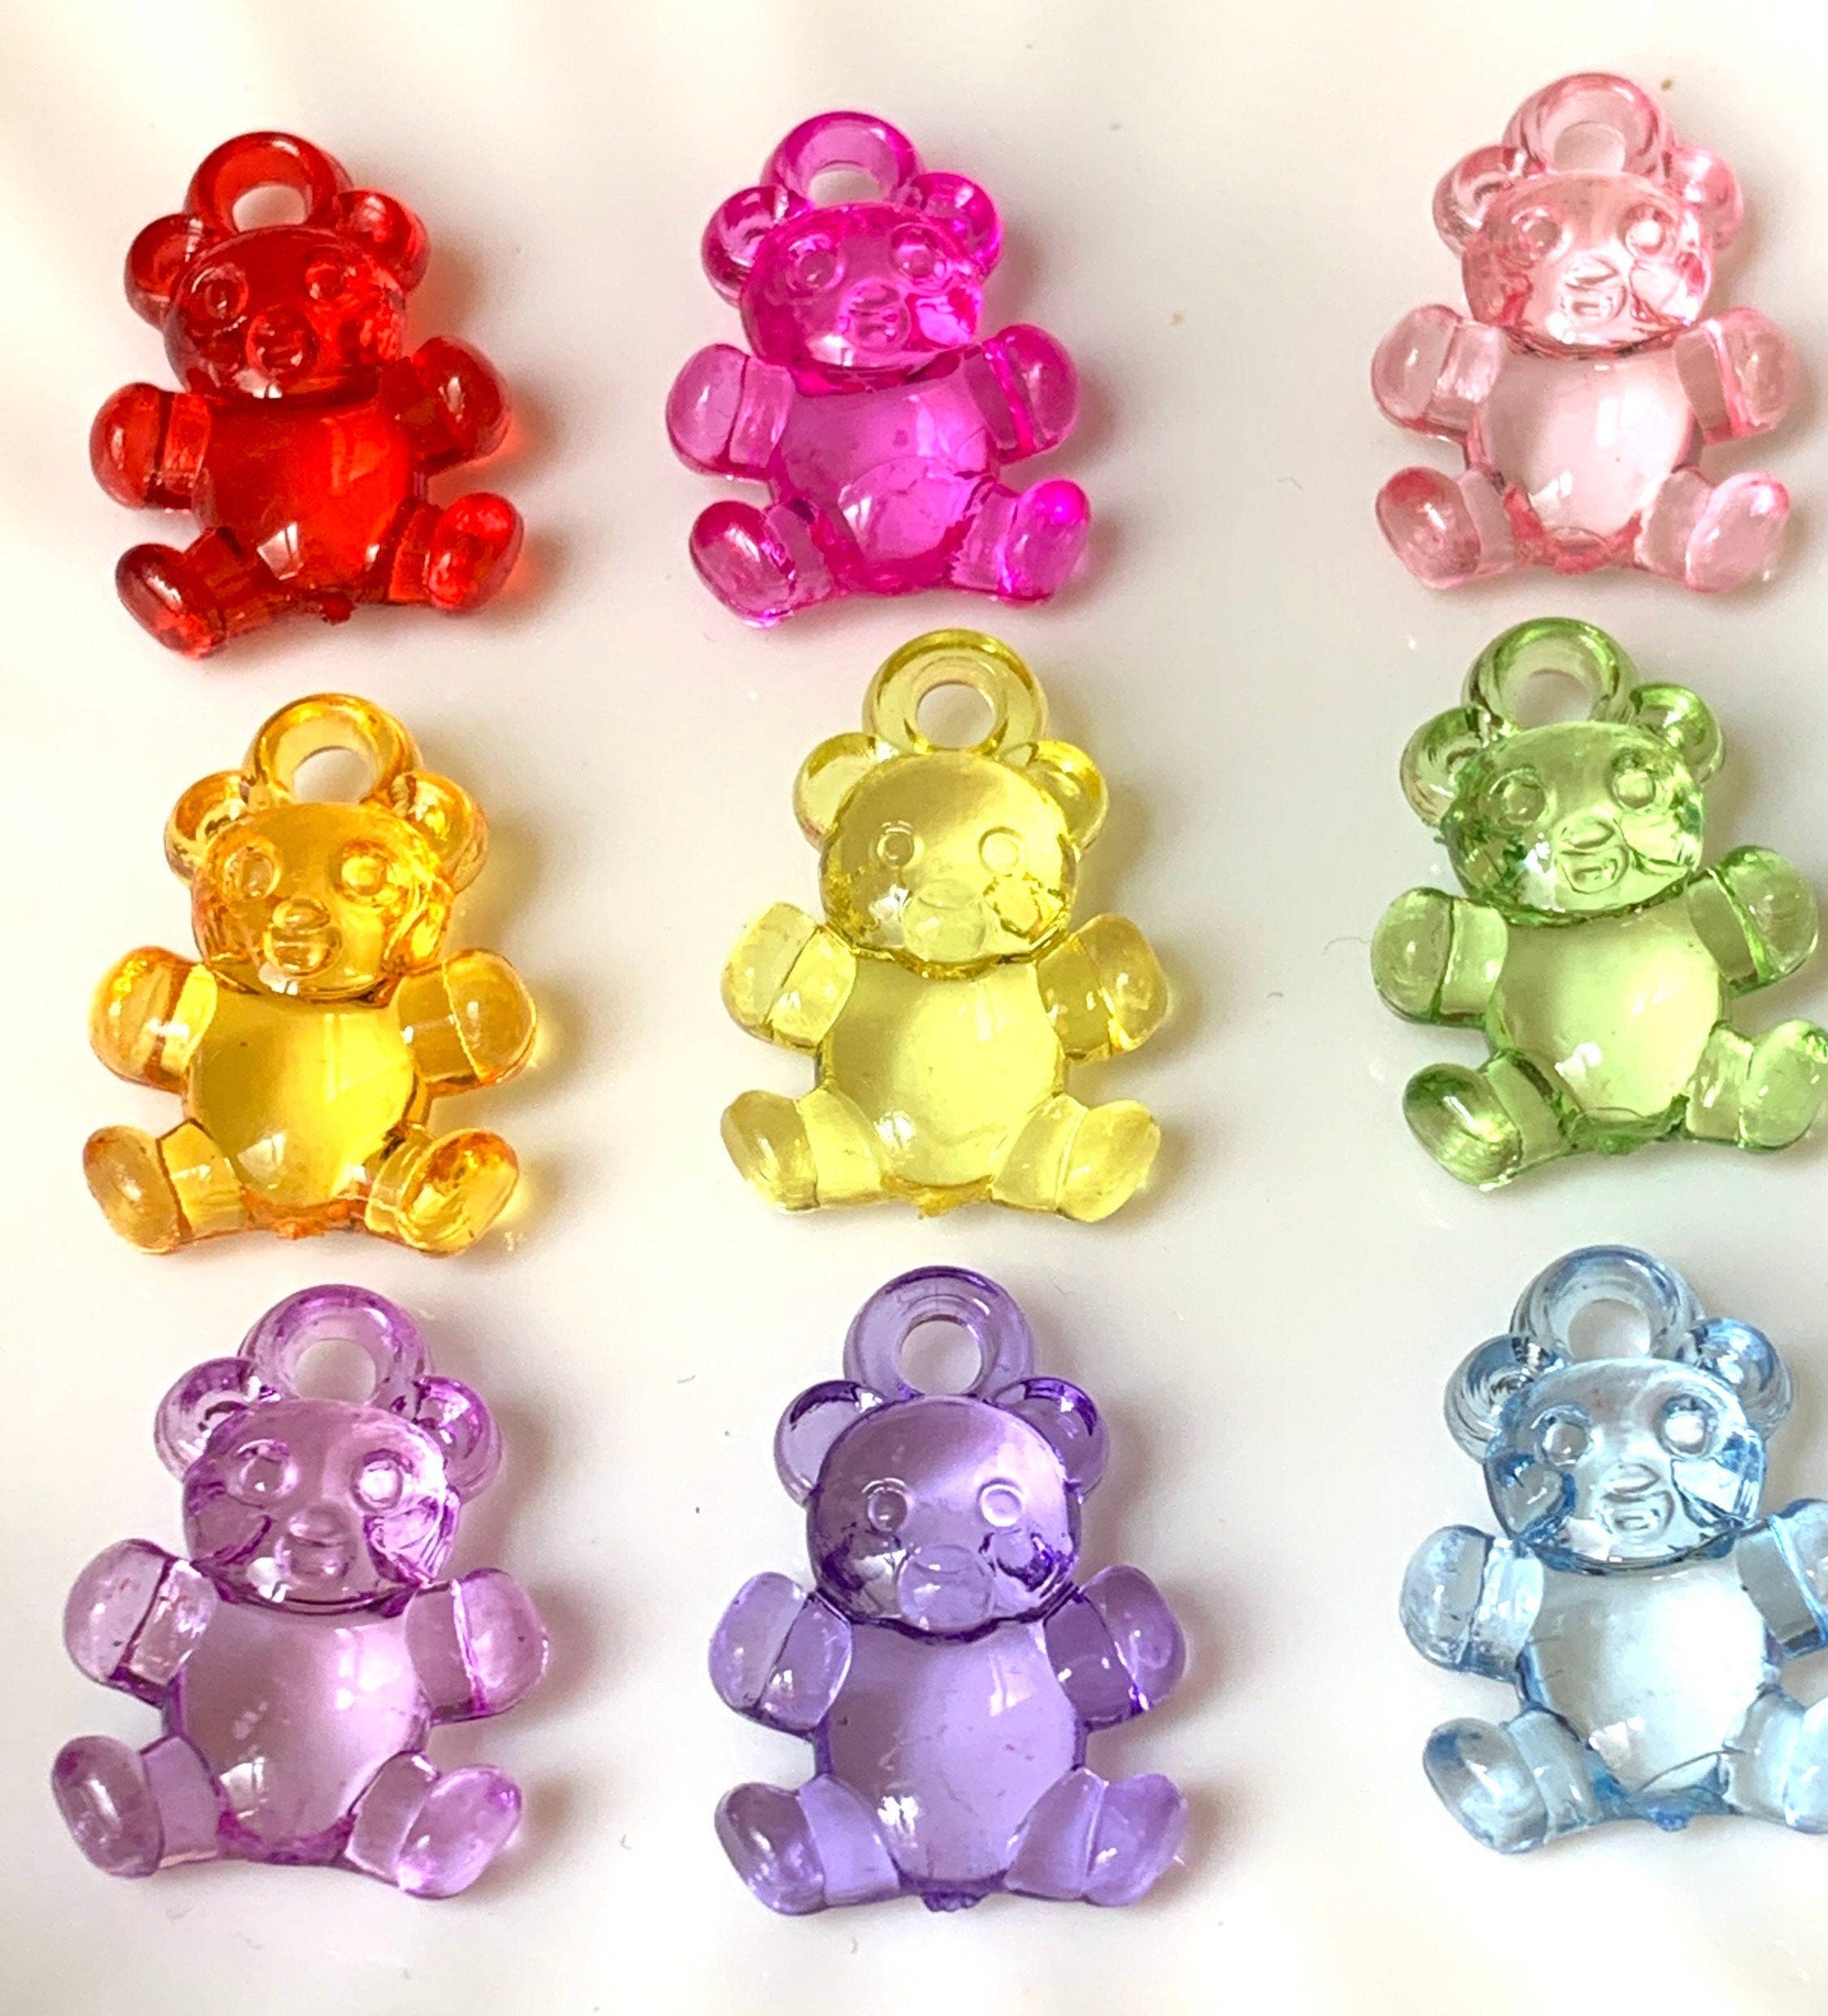  CCOZN 32 Pieces Resin Gummy Bear Pendant, 16 Colors